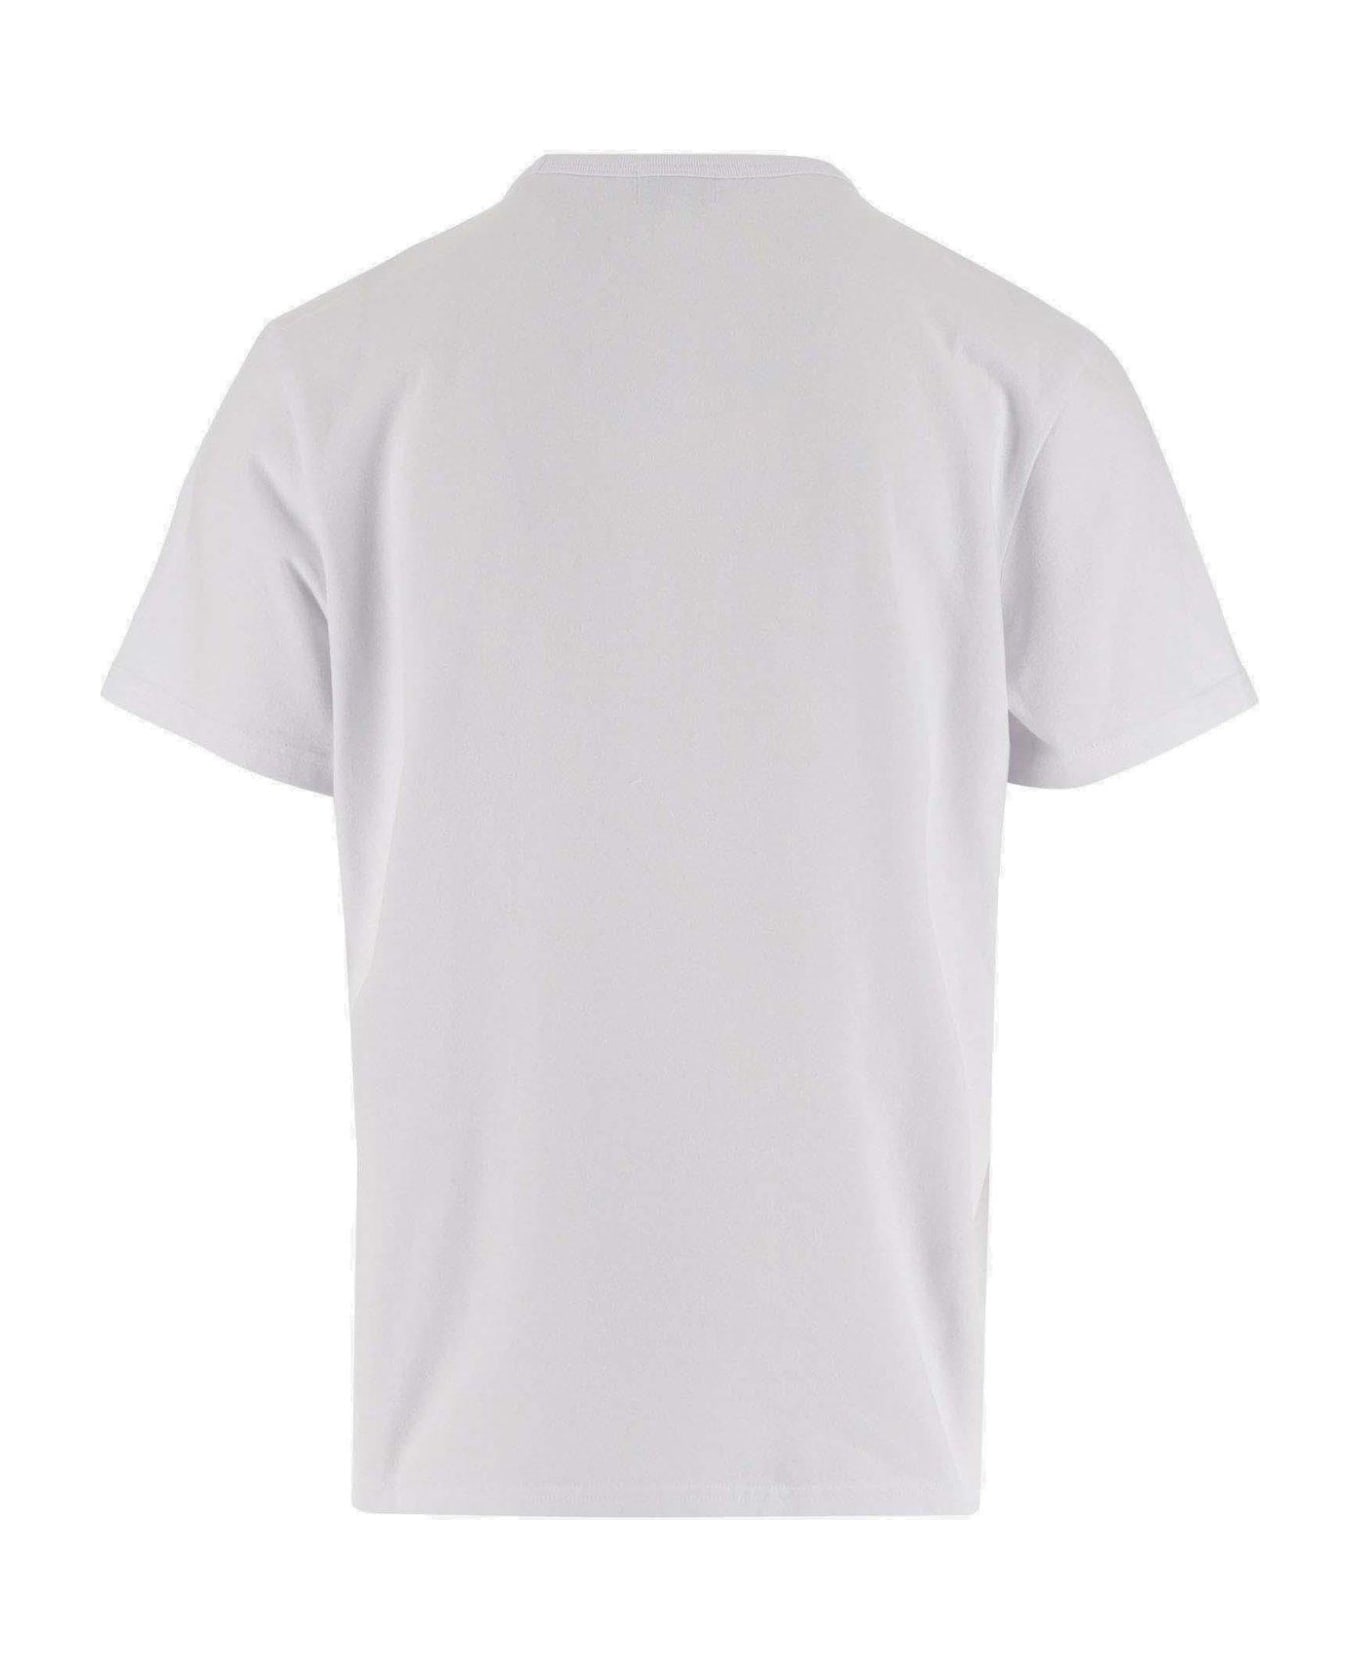 Woolrich Logo Printed Crewneck T-shirt - White シャツ